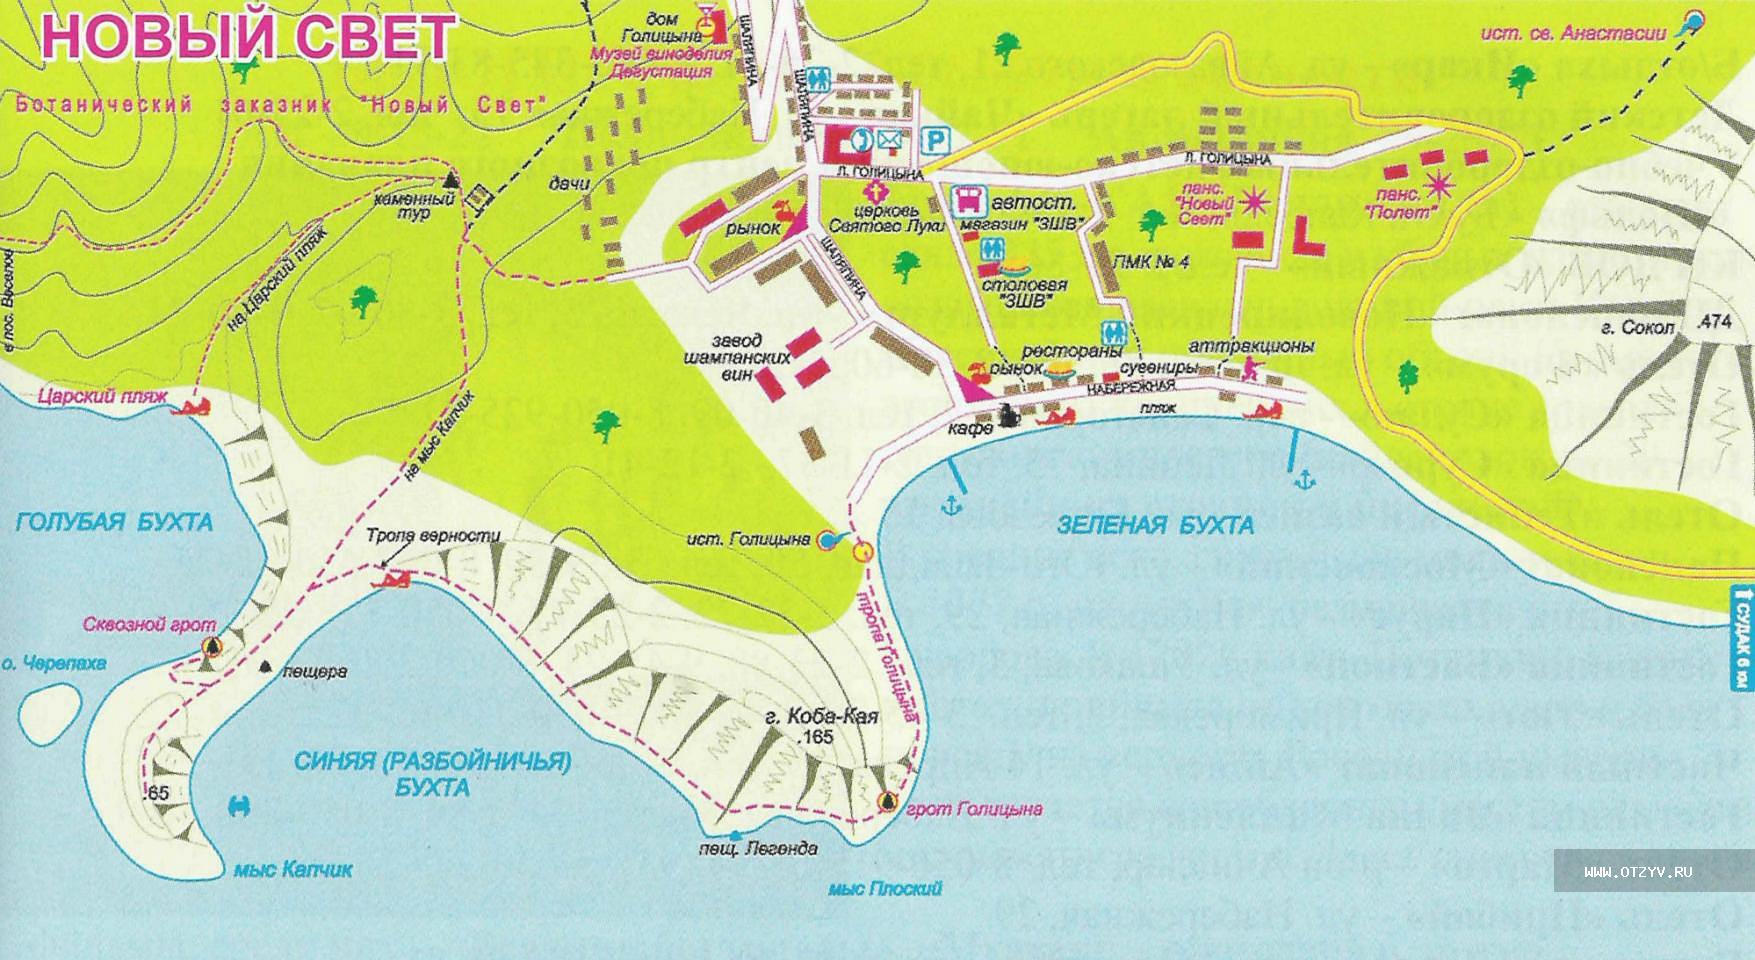 дикие пляжи крыма на карте с описанием